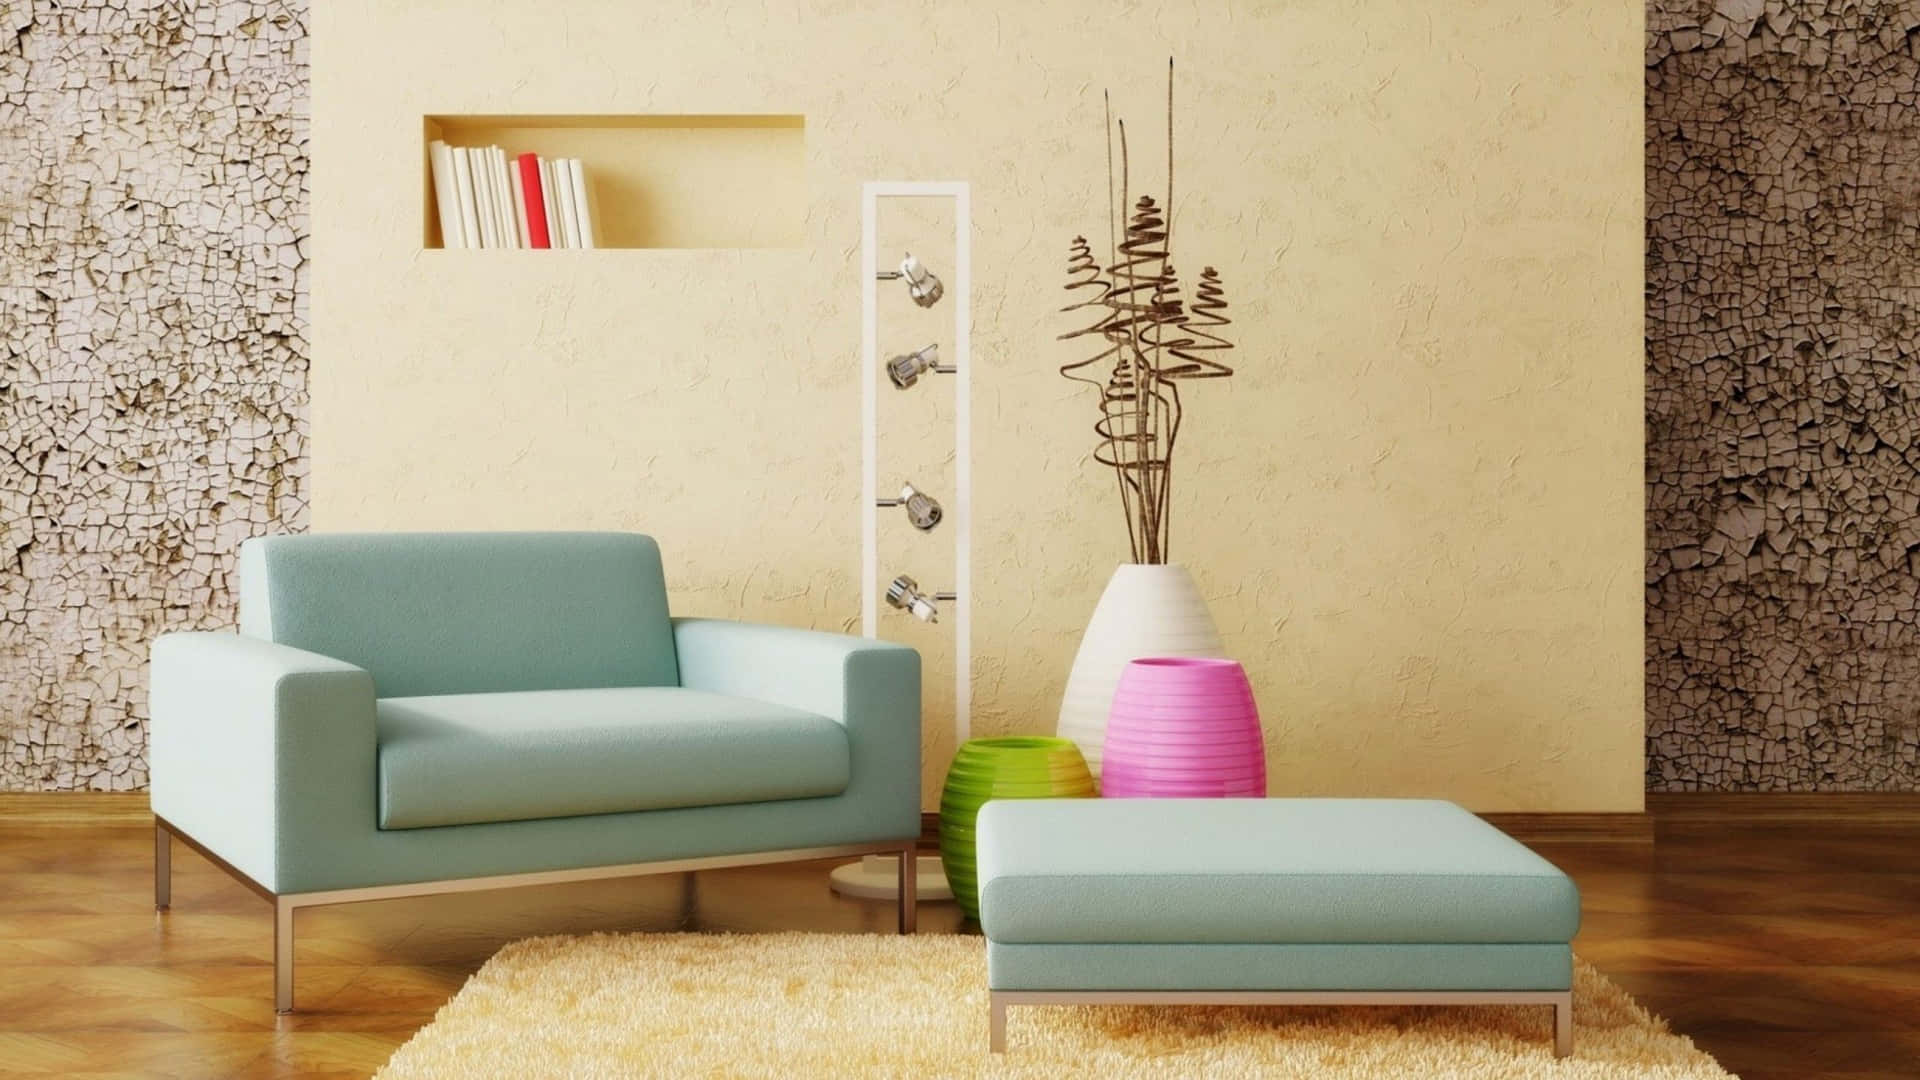 Rustic Interior Design With Pastel Furniture Wallpaper